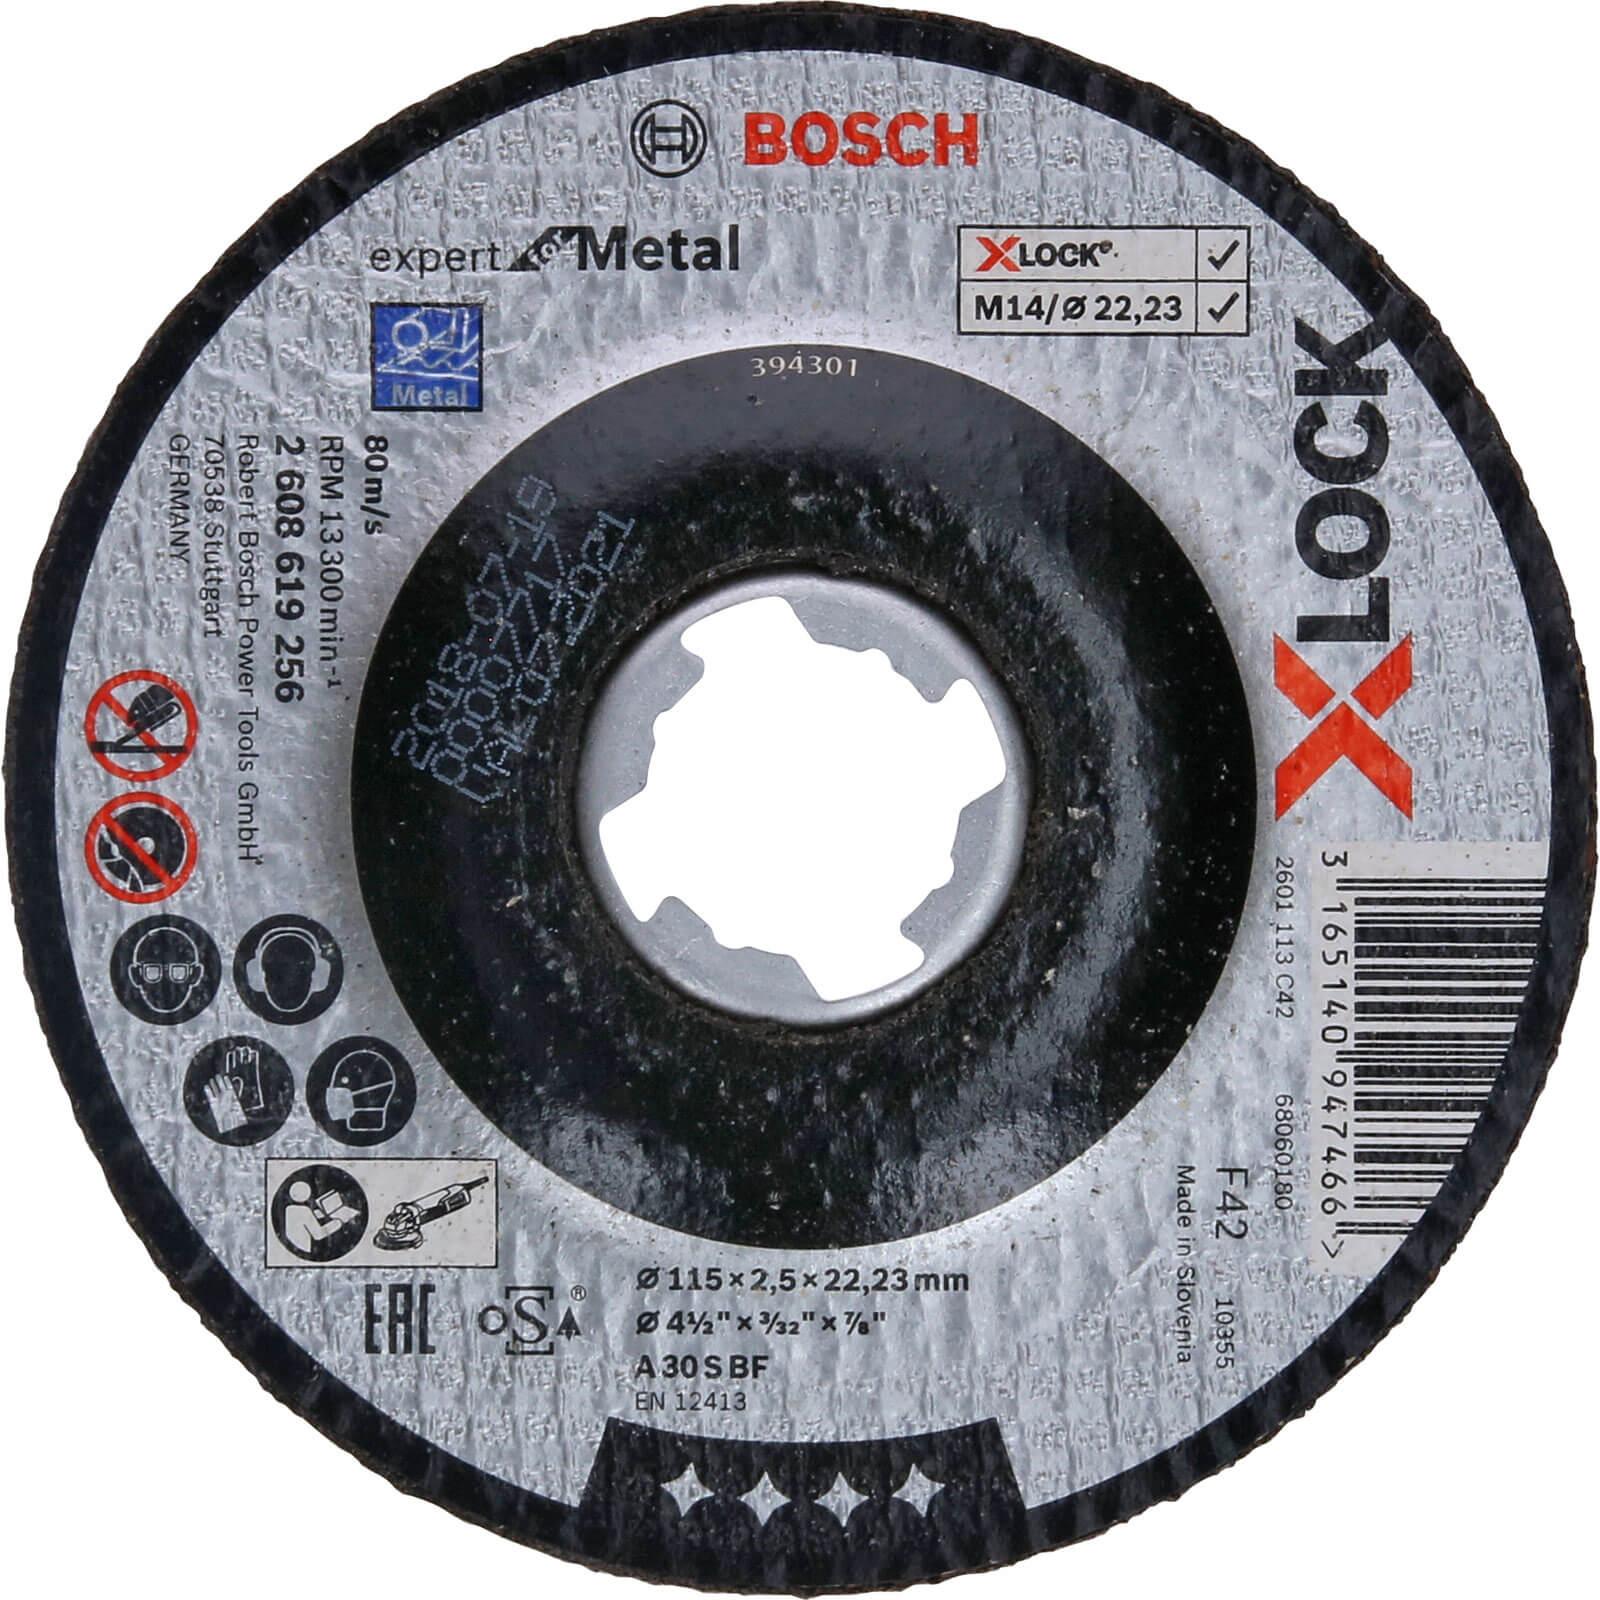 Photos - Cutting Disc Bosch Expert X Lock Depressed Centre  for Metal 115mm 2.5mm 22 